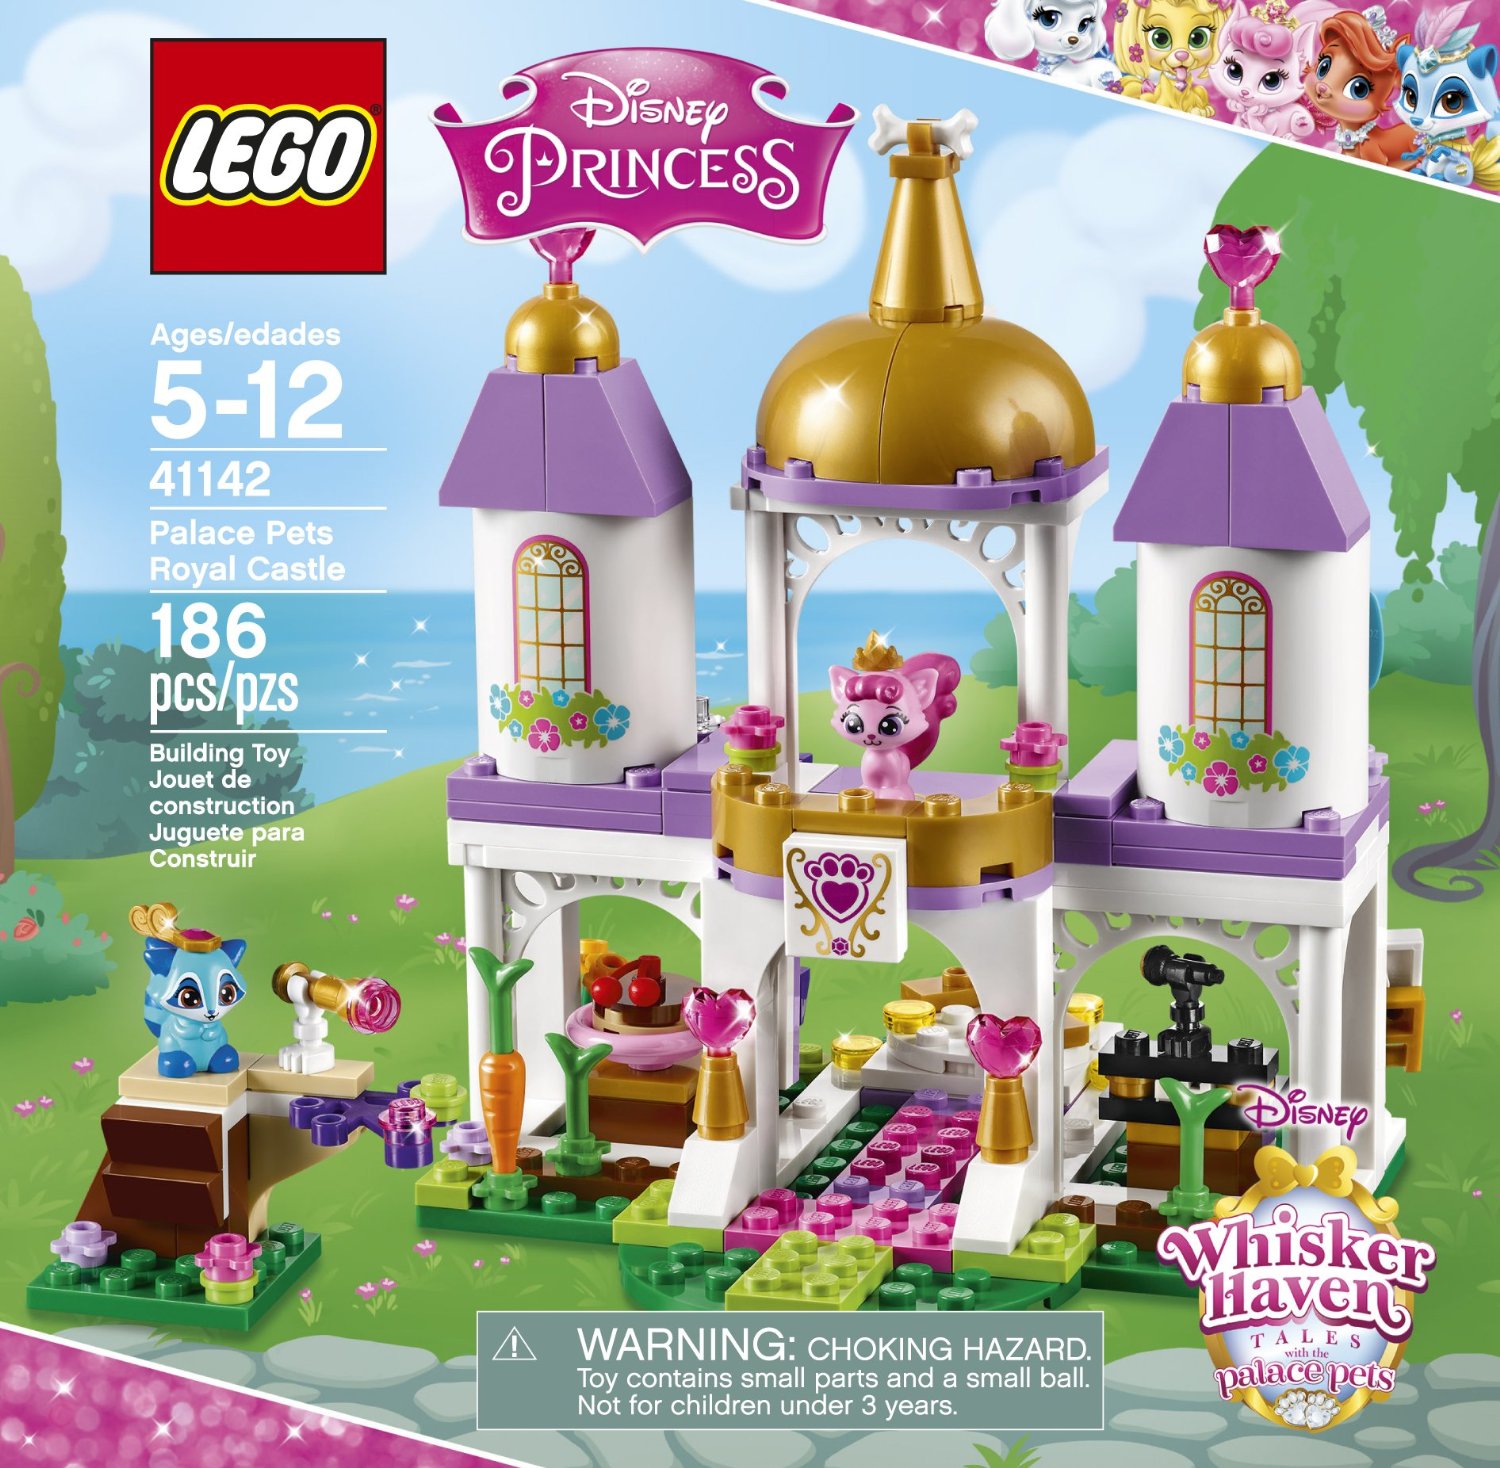 LEGO Disney Princess Palace Pets Royal Castle Only $15.99 on Amazon!